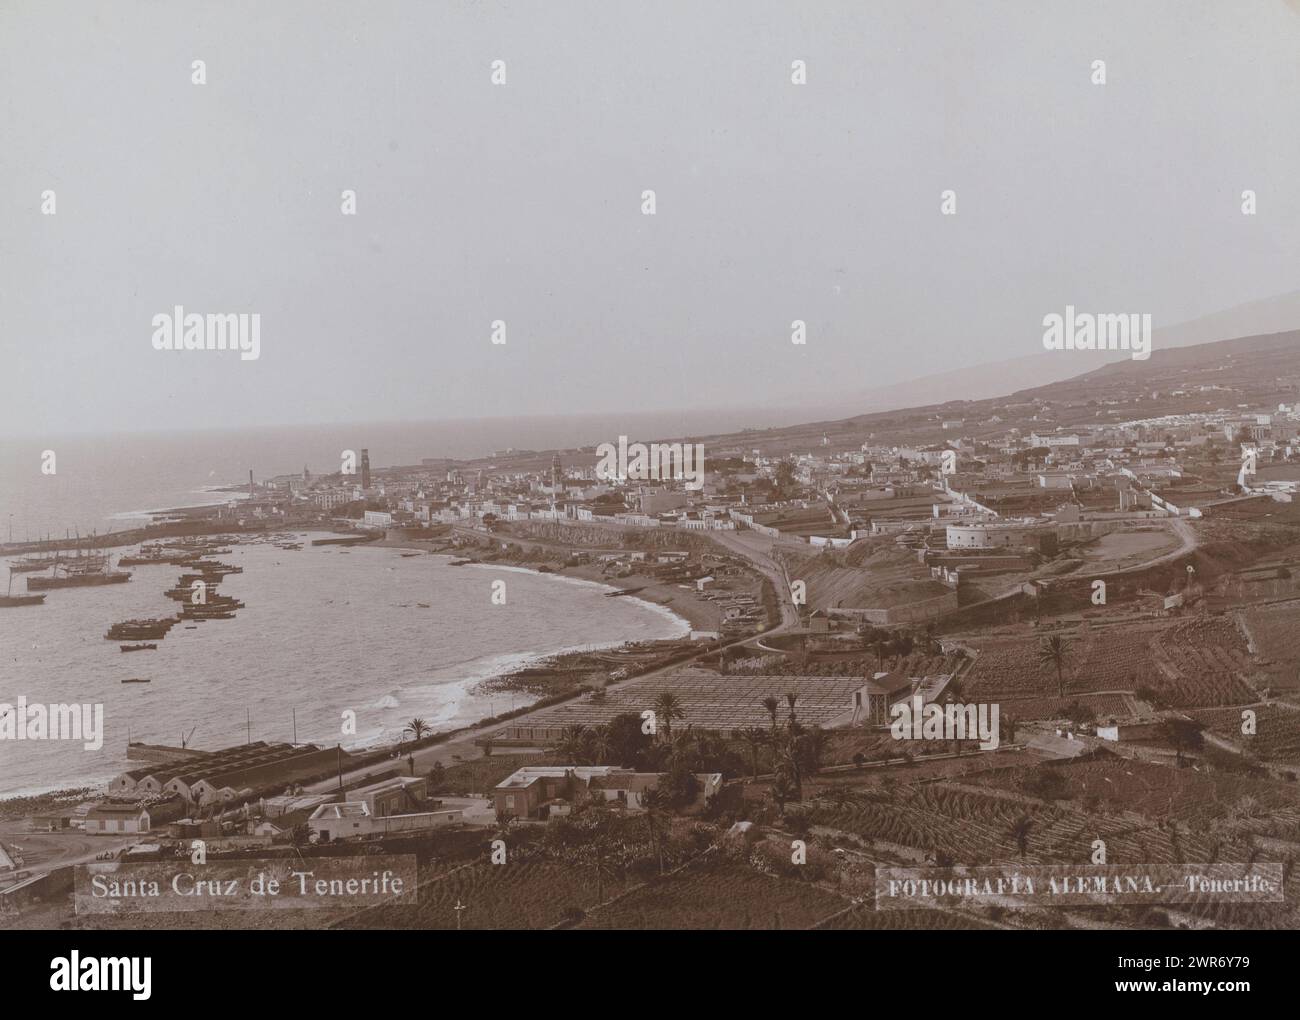 View of Santa Cruz and the beach, Santa Cruz de Tenerife (title on object), Fotografia Alemana, Tenerife, 1880 - 1920, photographic support, height 160 mm × width 222 mm, photograph Stock Photo